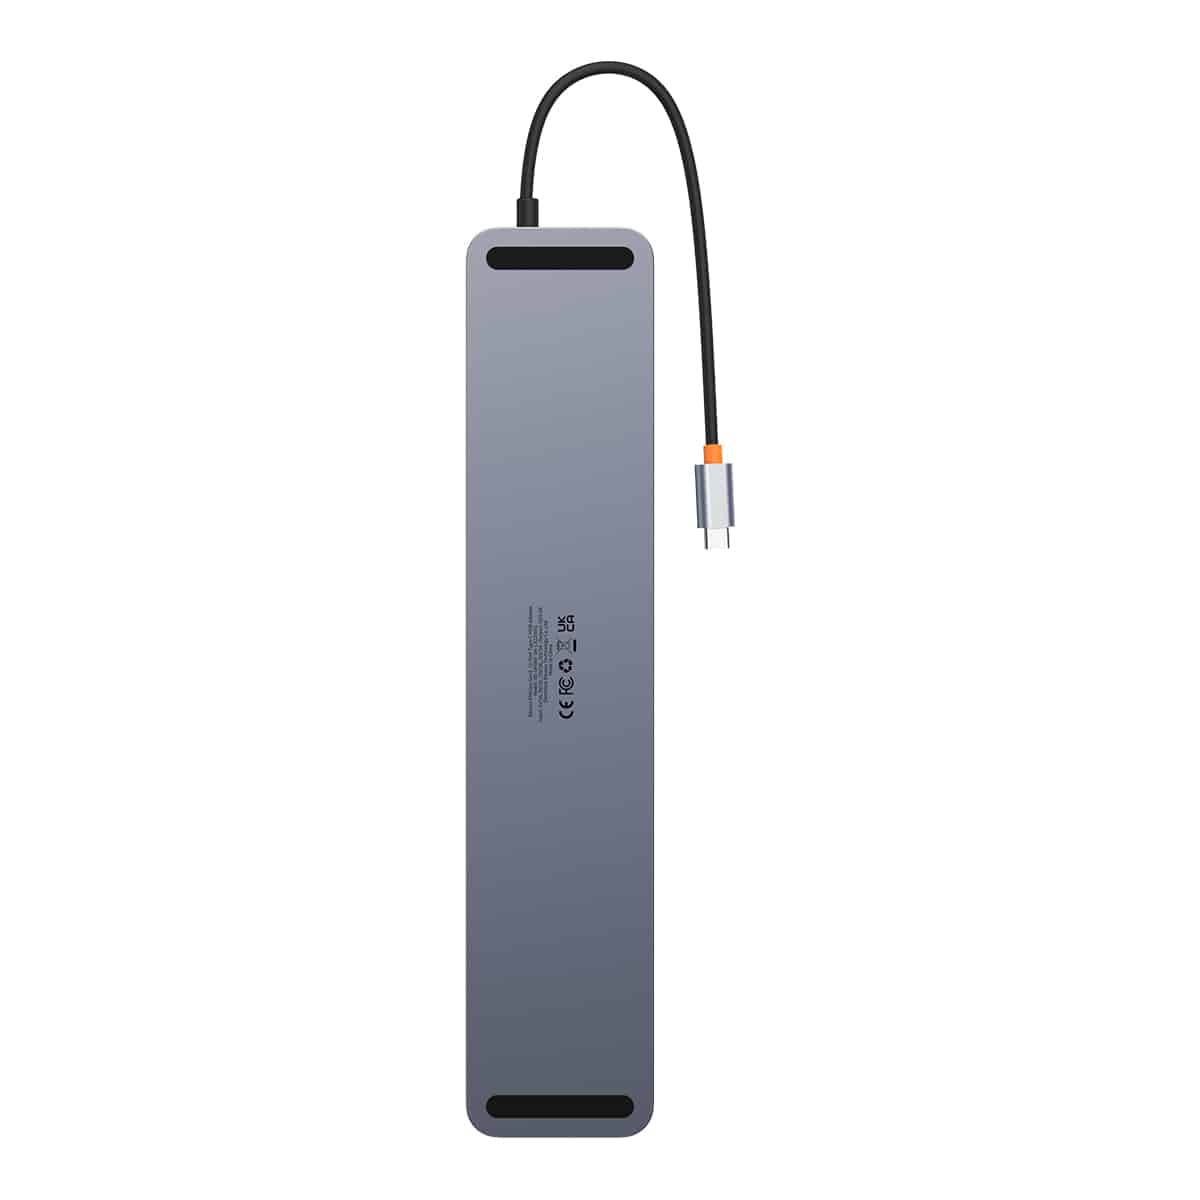 Baseus EliteJoy Gen2 11-Port Type-C HUB Adapter Dark gray (Type-C to HDMI*1+USB3.0*3+PD*1+VGA*1+SD/TF*1+RJ45*1+Type-C Data*1+3.5mm*1)